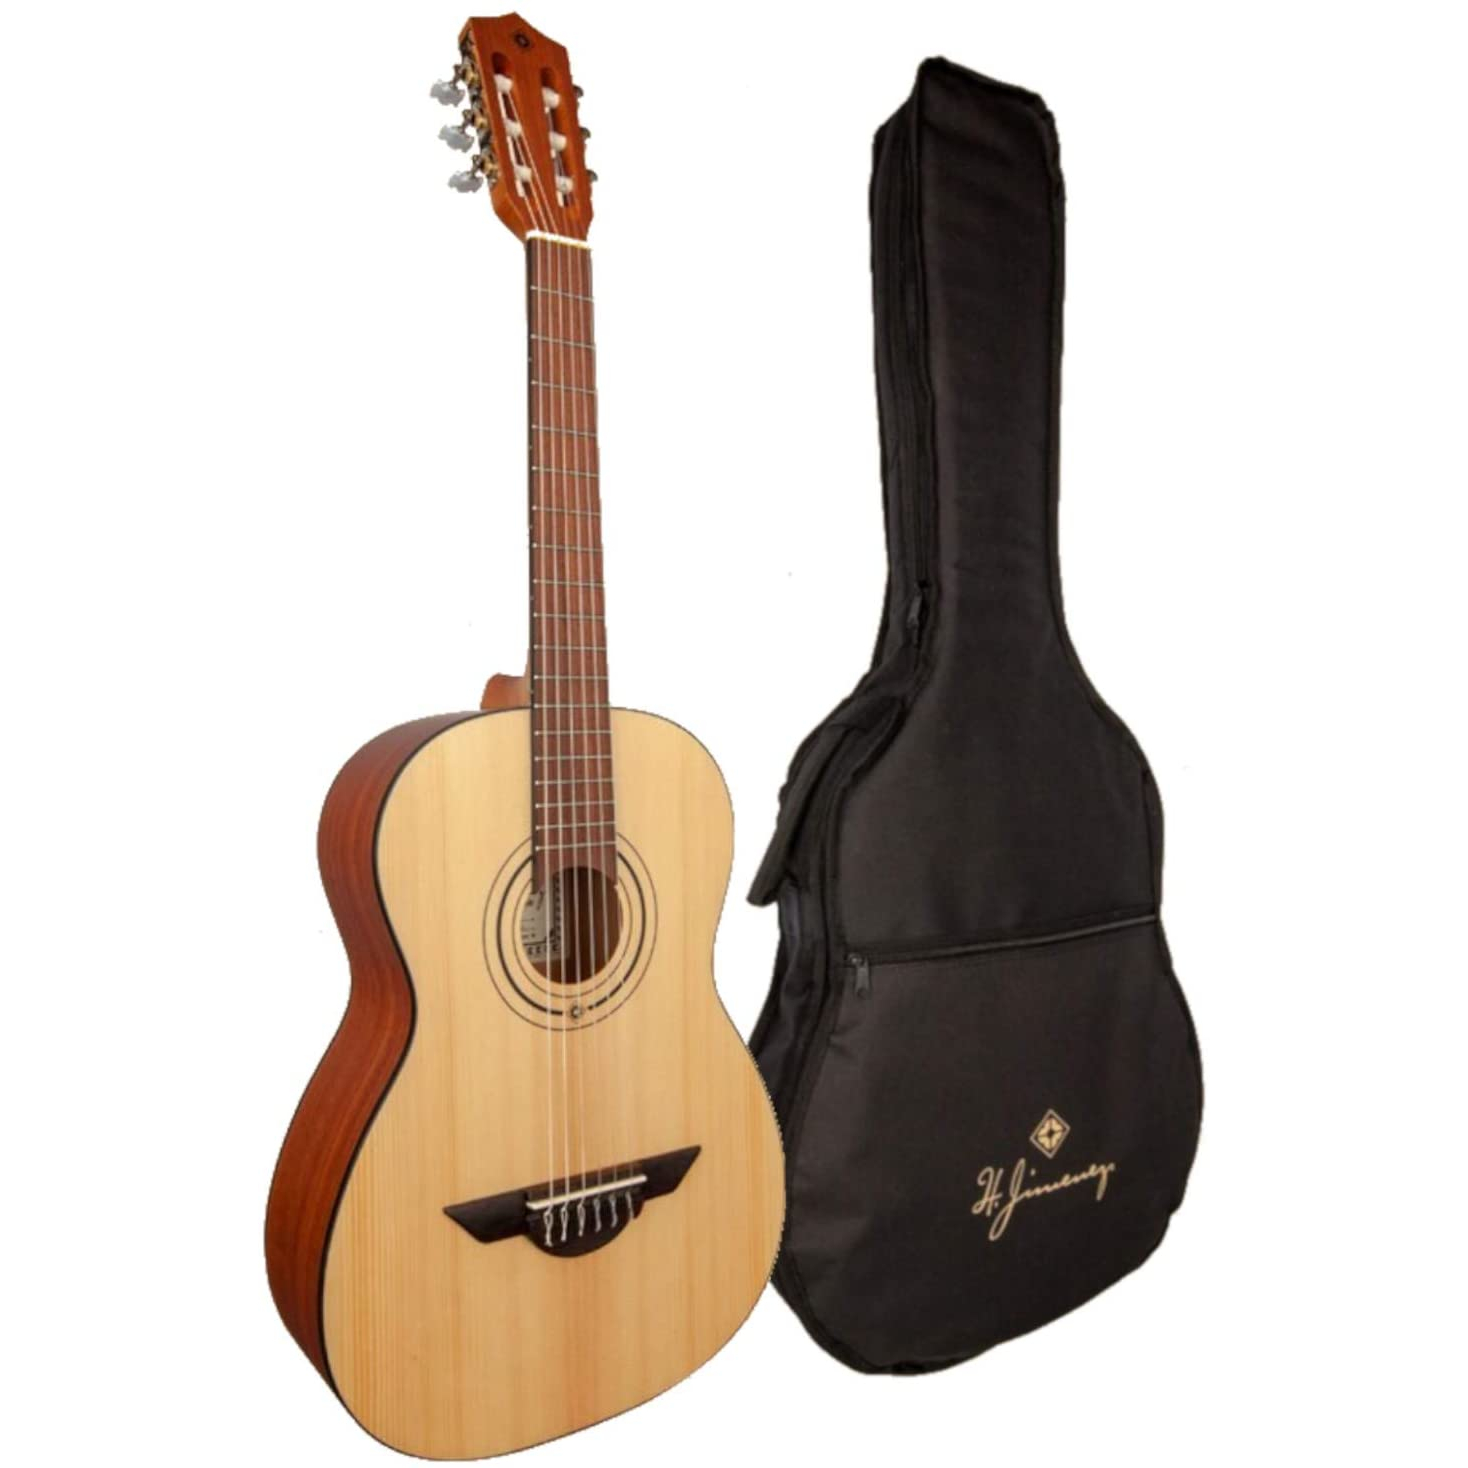 H Jimenez Educativo Series 3/4 Size Nylon String Guitar